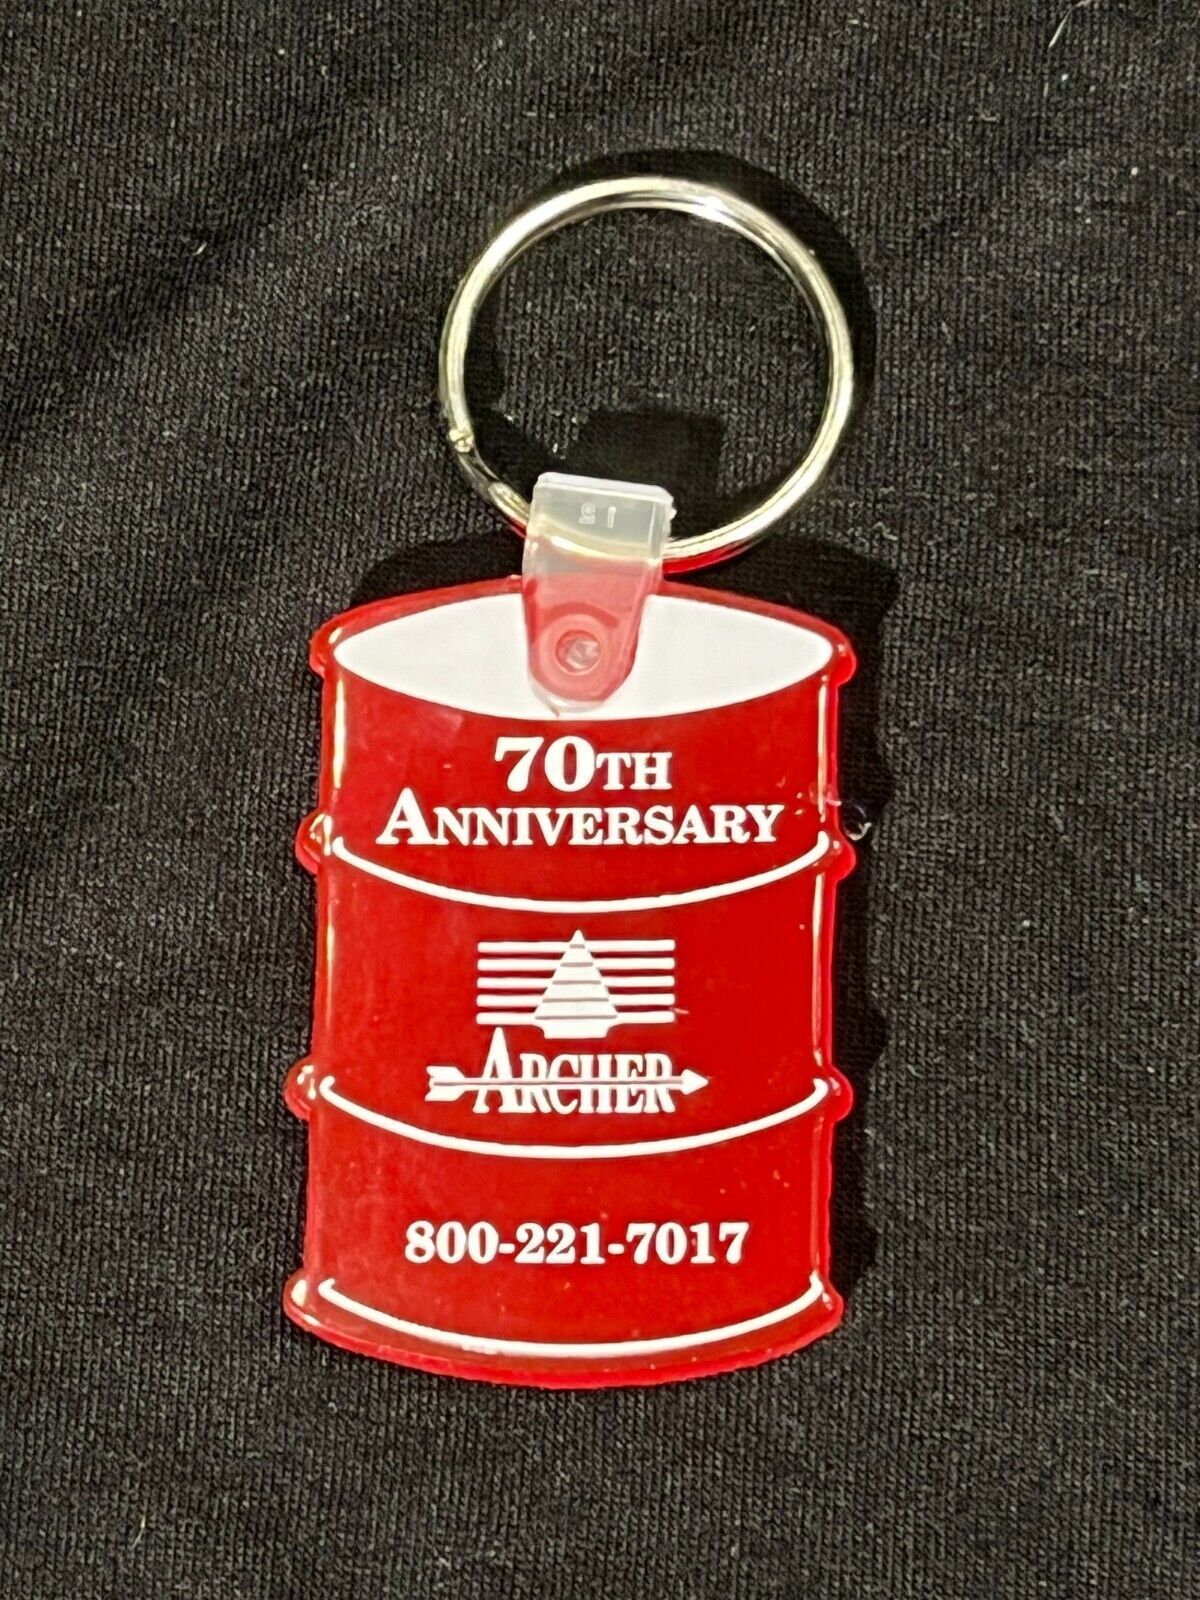 Archer Oil Lubricants 70th Anniversary Key Chain Omaha Nebraska